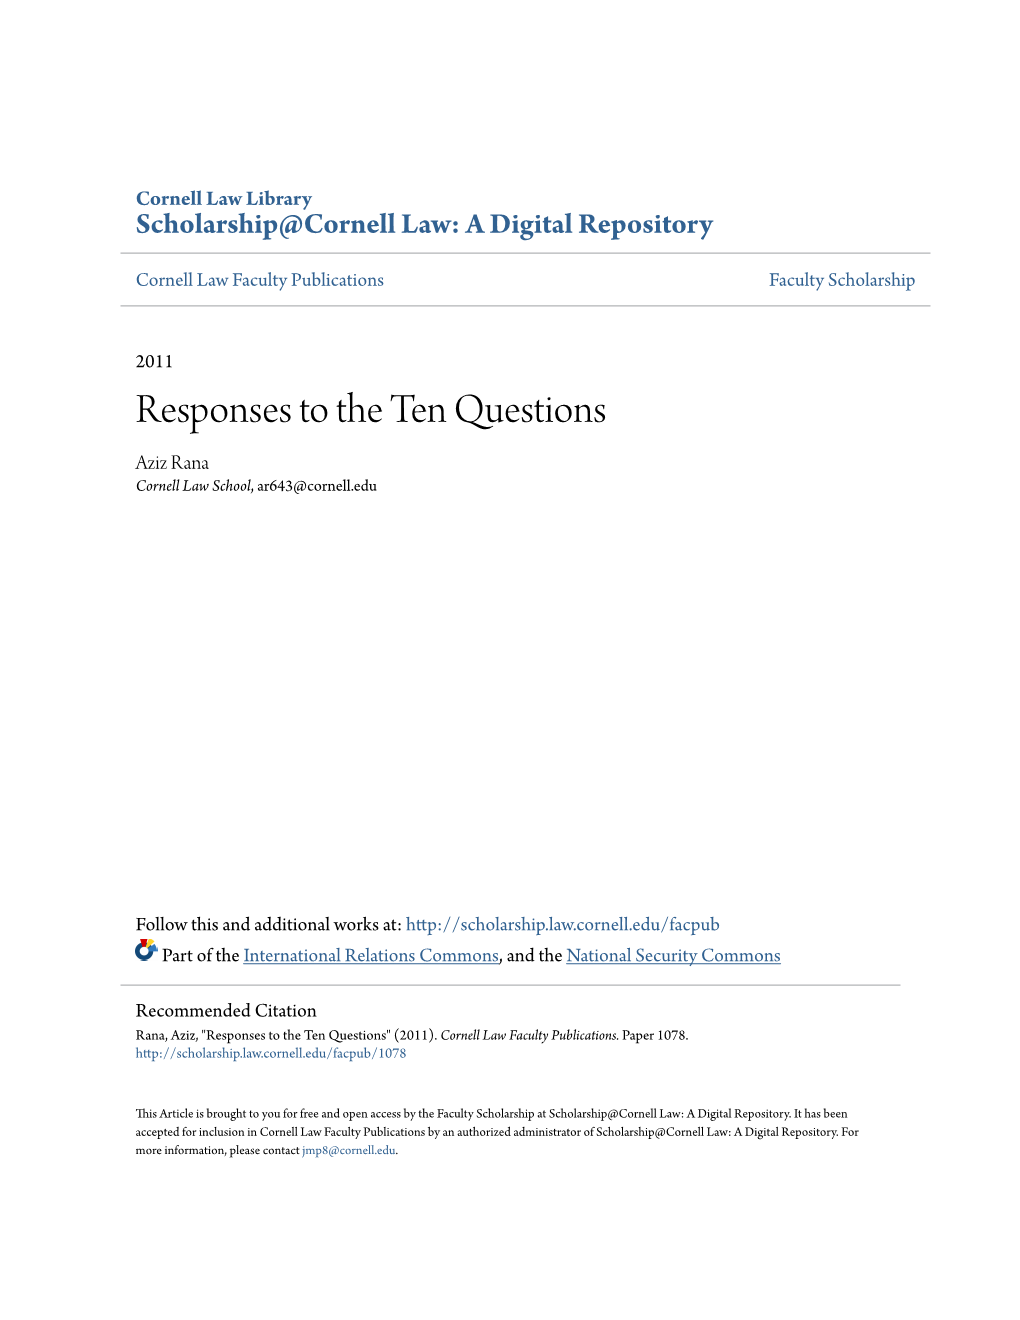 Responses to the Ten Questions Aziz Rana Cornell Law School, Ar643@Cornell.Edu